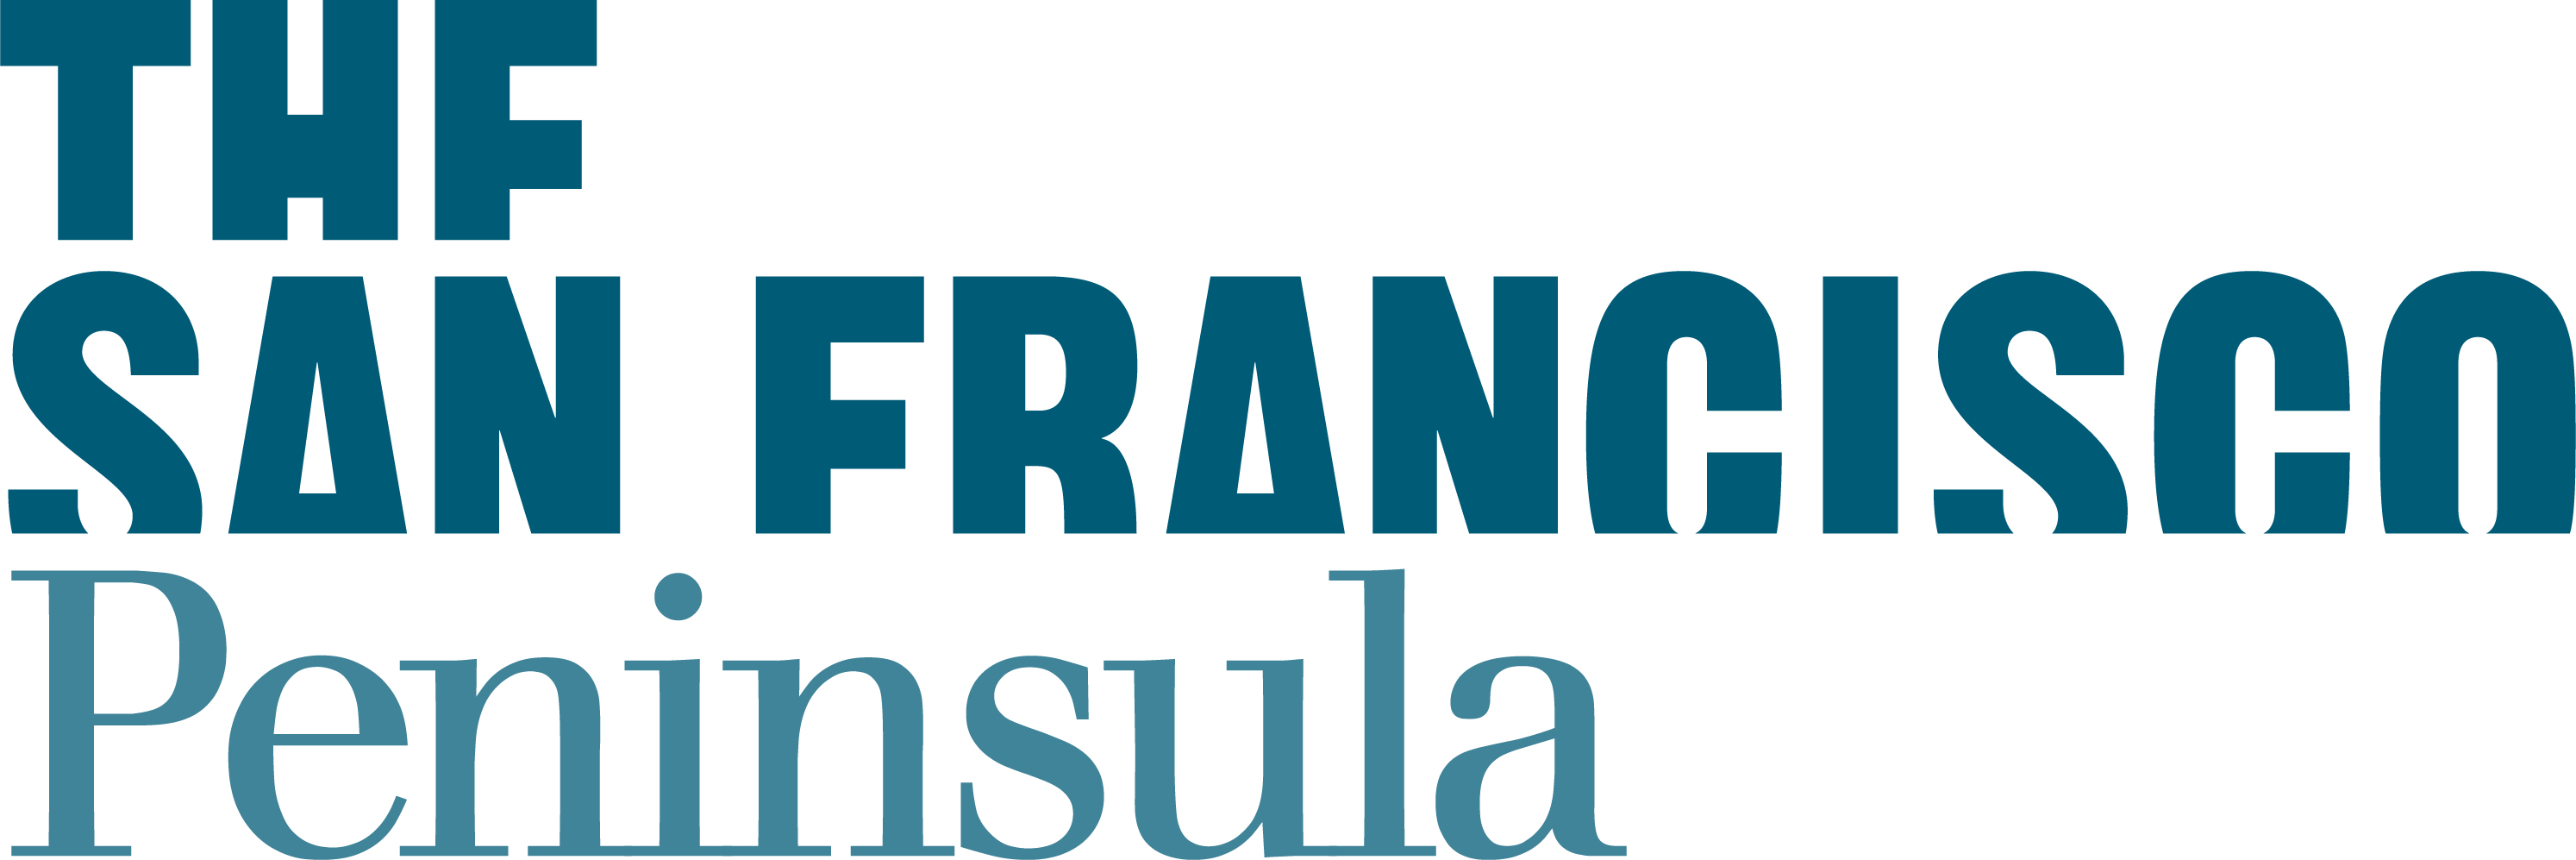 SF_Peninsula_primary-logo-evening-blue